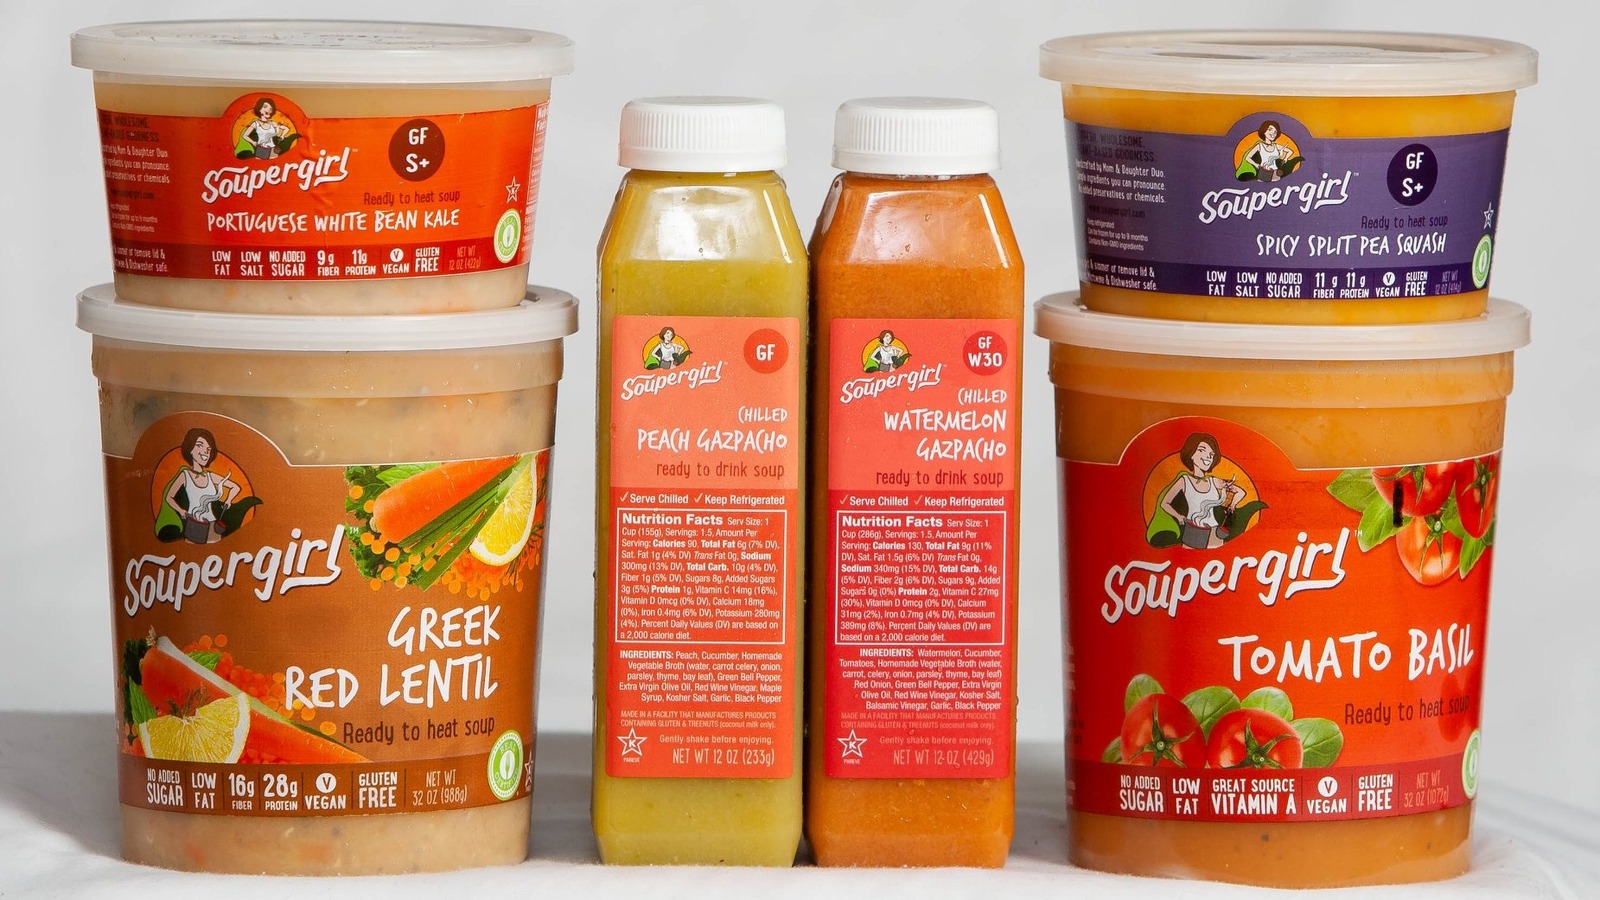 Fresh Foods Market Soups buy one get one FREE! - The Harris Teeter